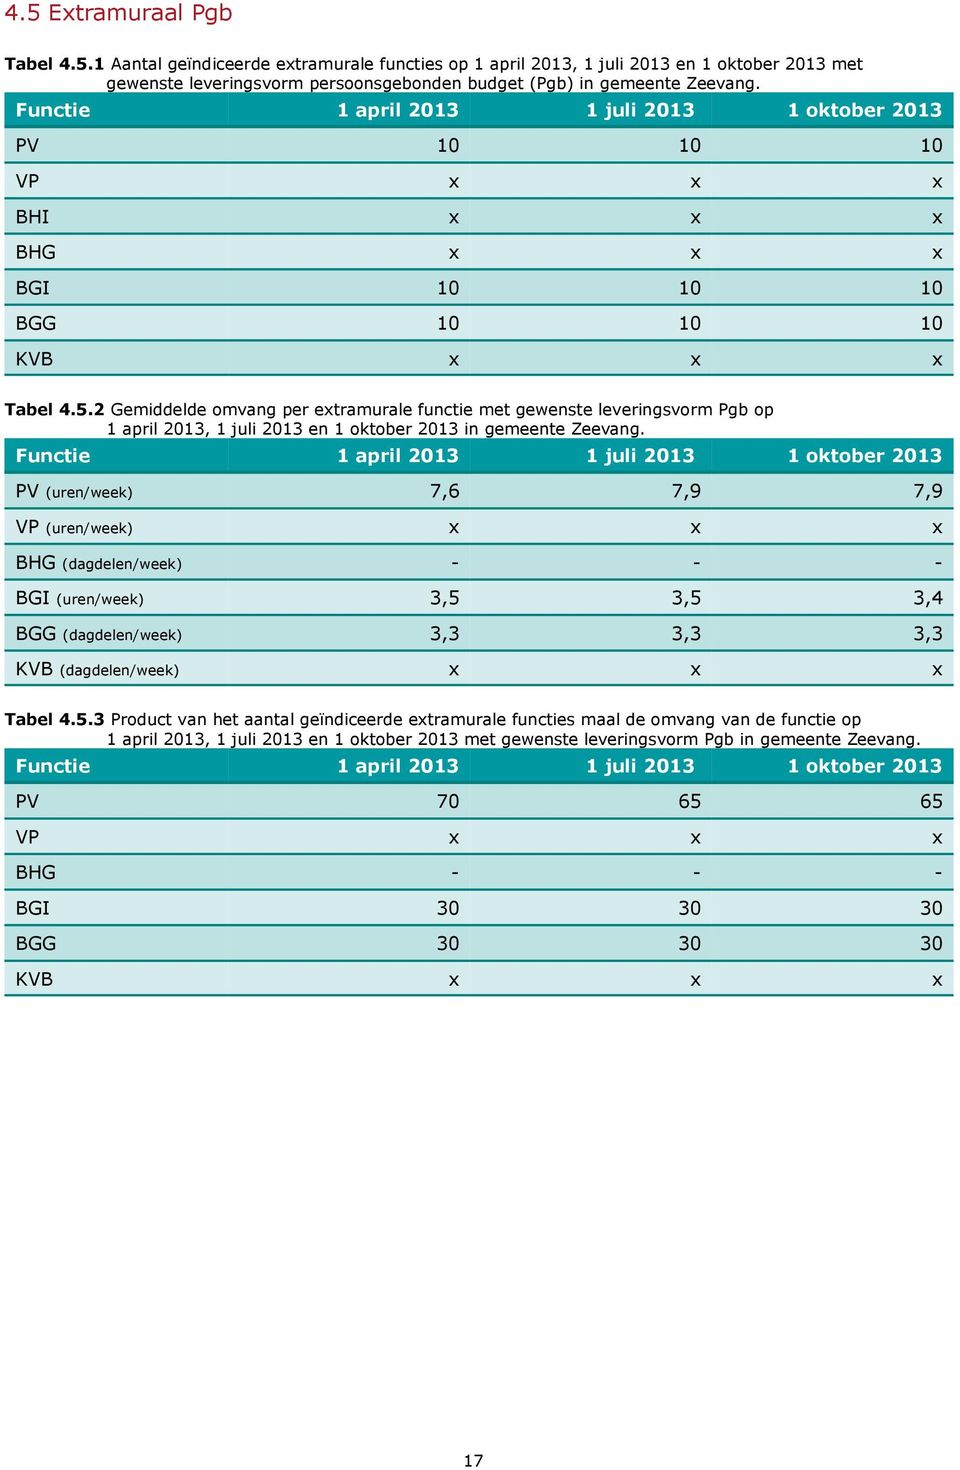 2 Gemiddelde omvang per extramurale functie met gewenste leveringsvorm Pgb op 1 april 2013, 1 juli 2013 en 1 oktober 2013 in gemeente Zeevang.